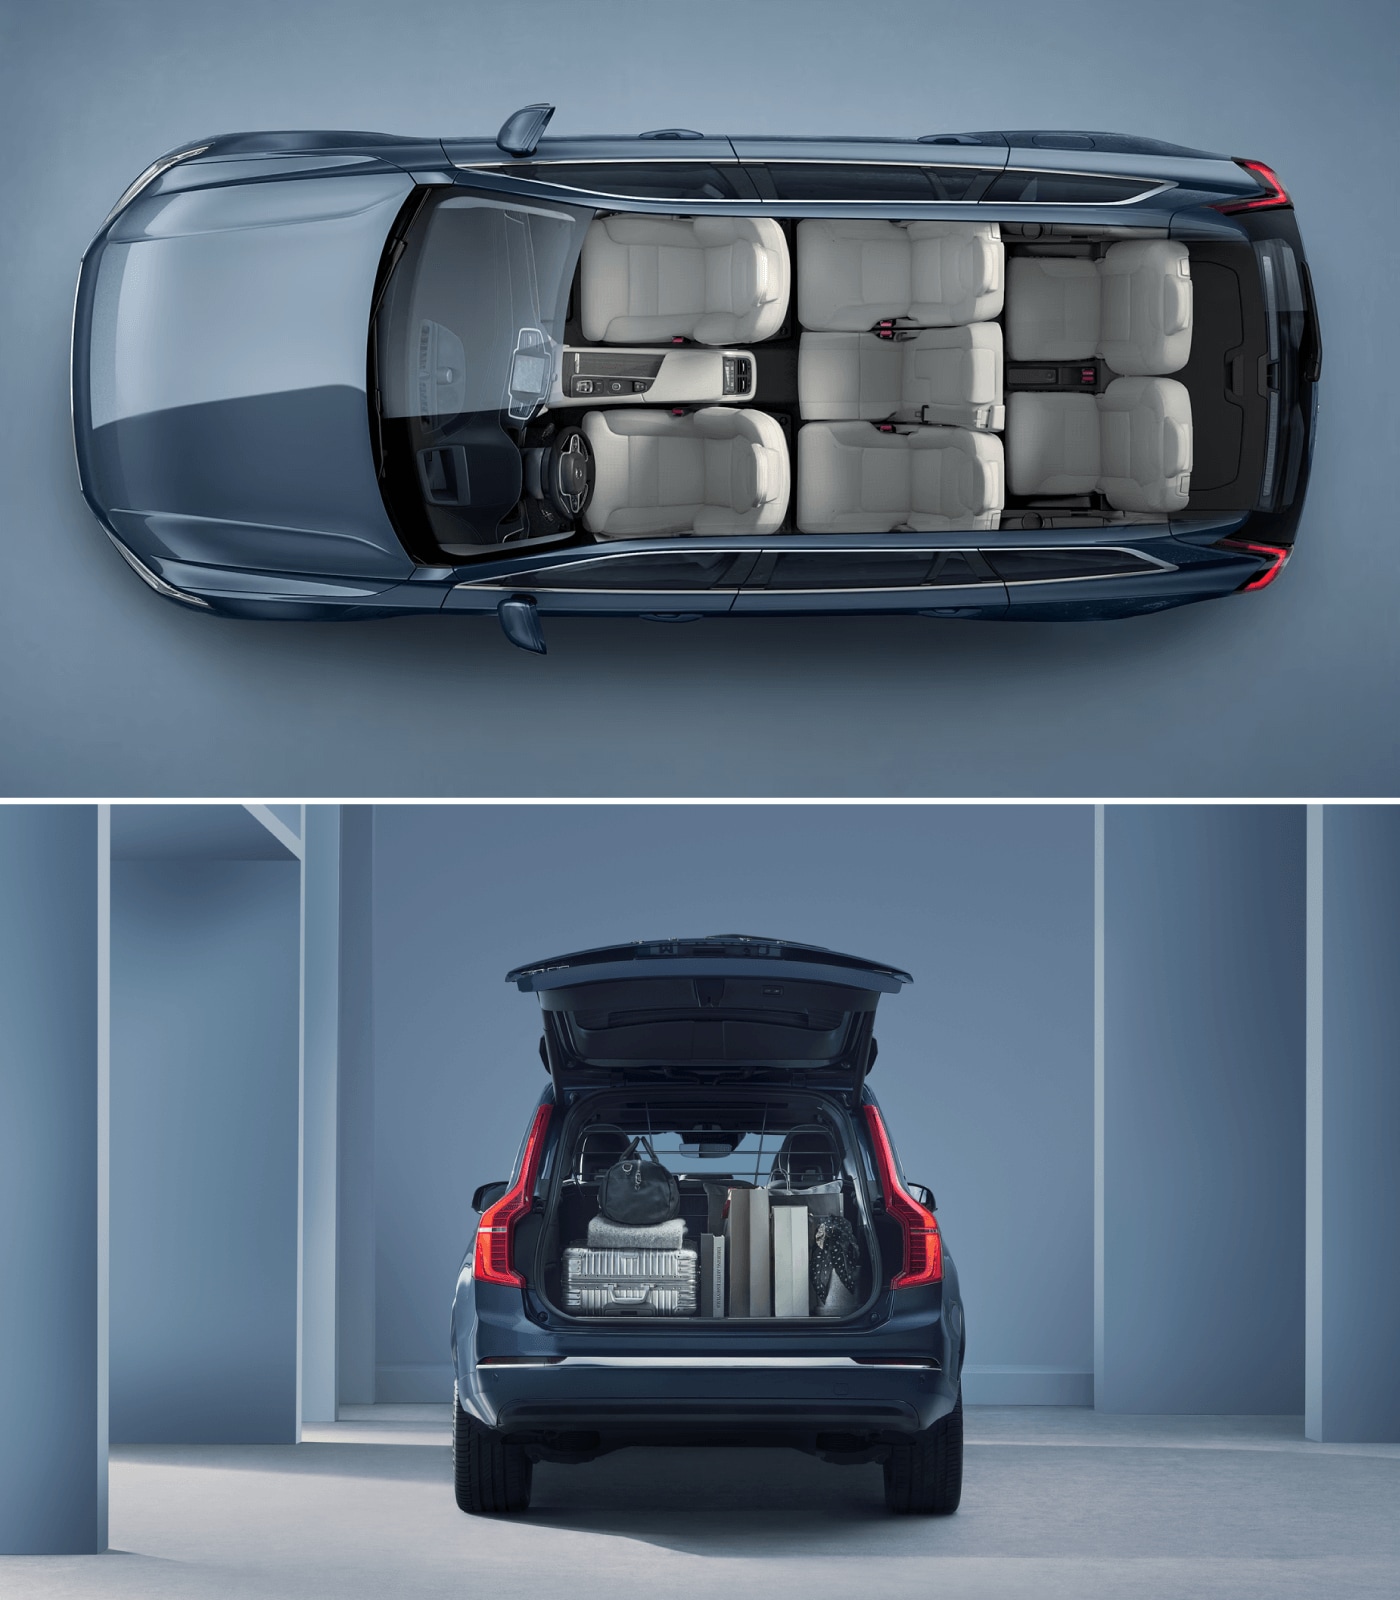 Audi Q7 vs. Volvo XC90 Dimensions and Cargo Space